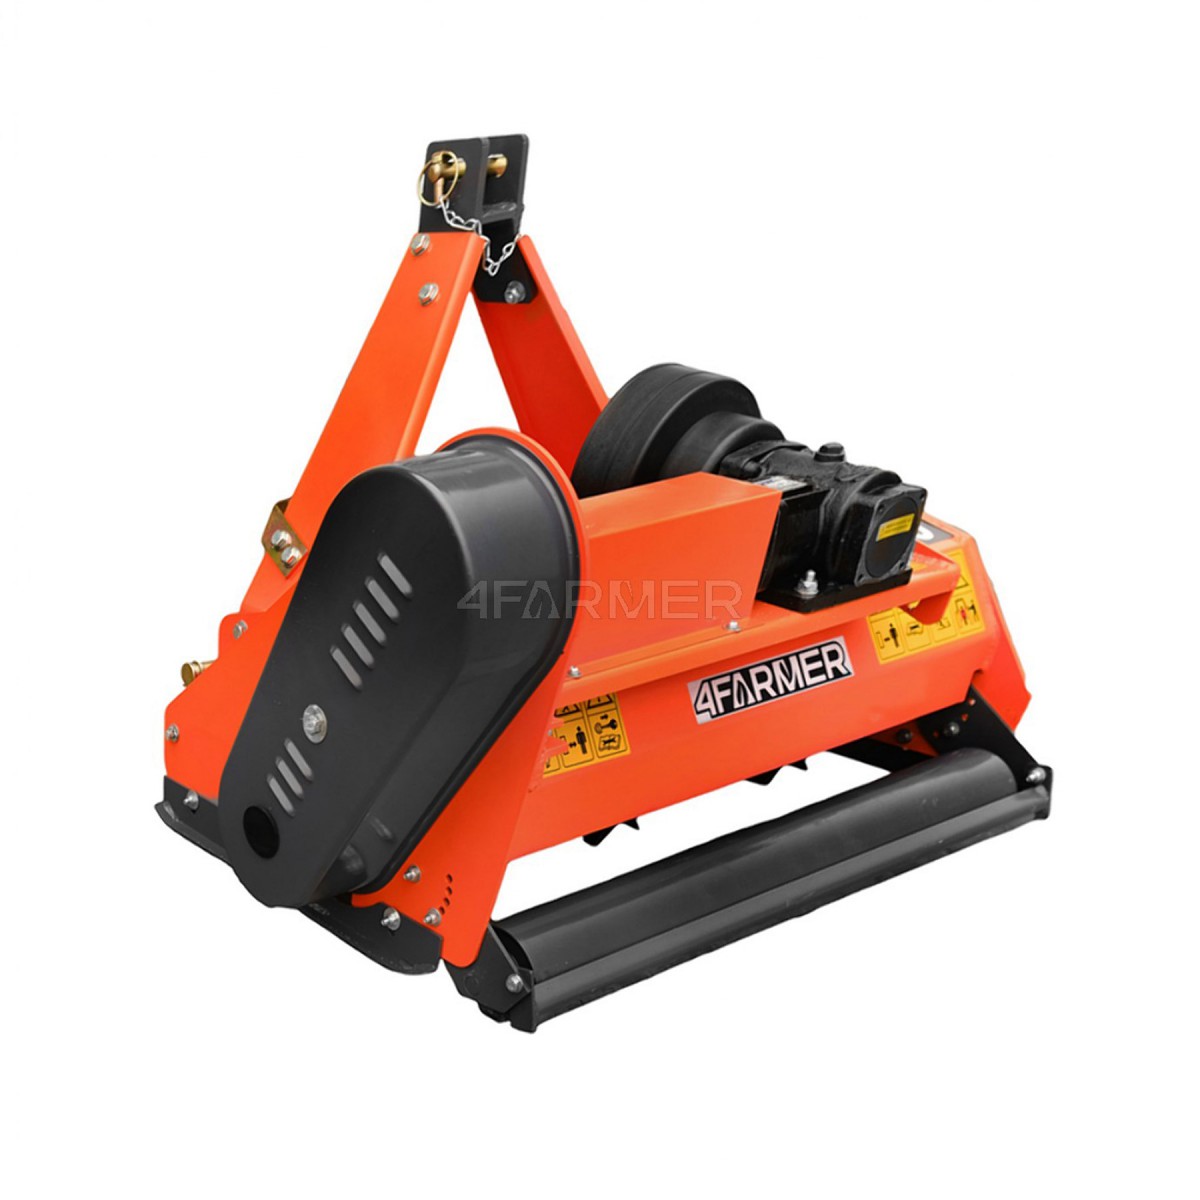 Flail mower EF 85 4FARMER - orange